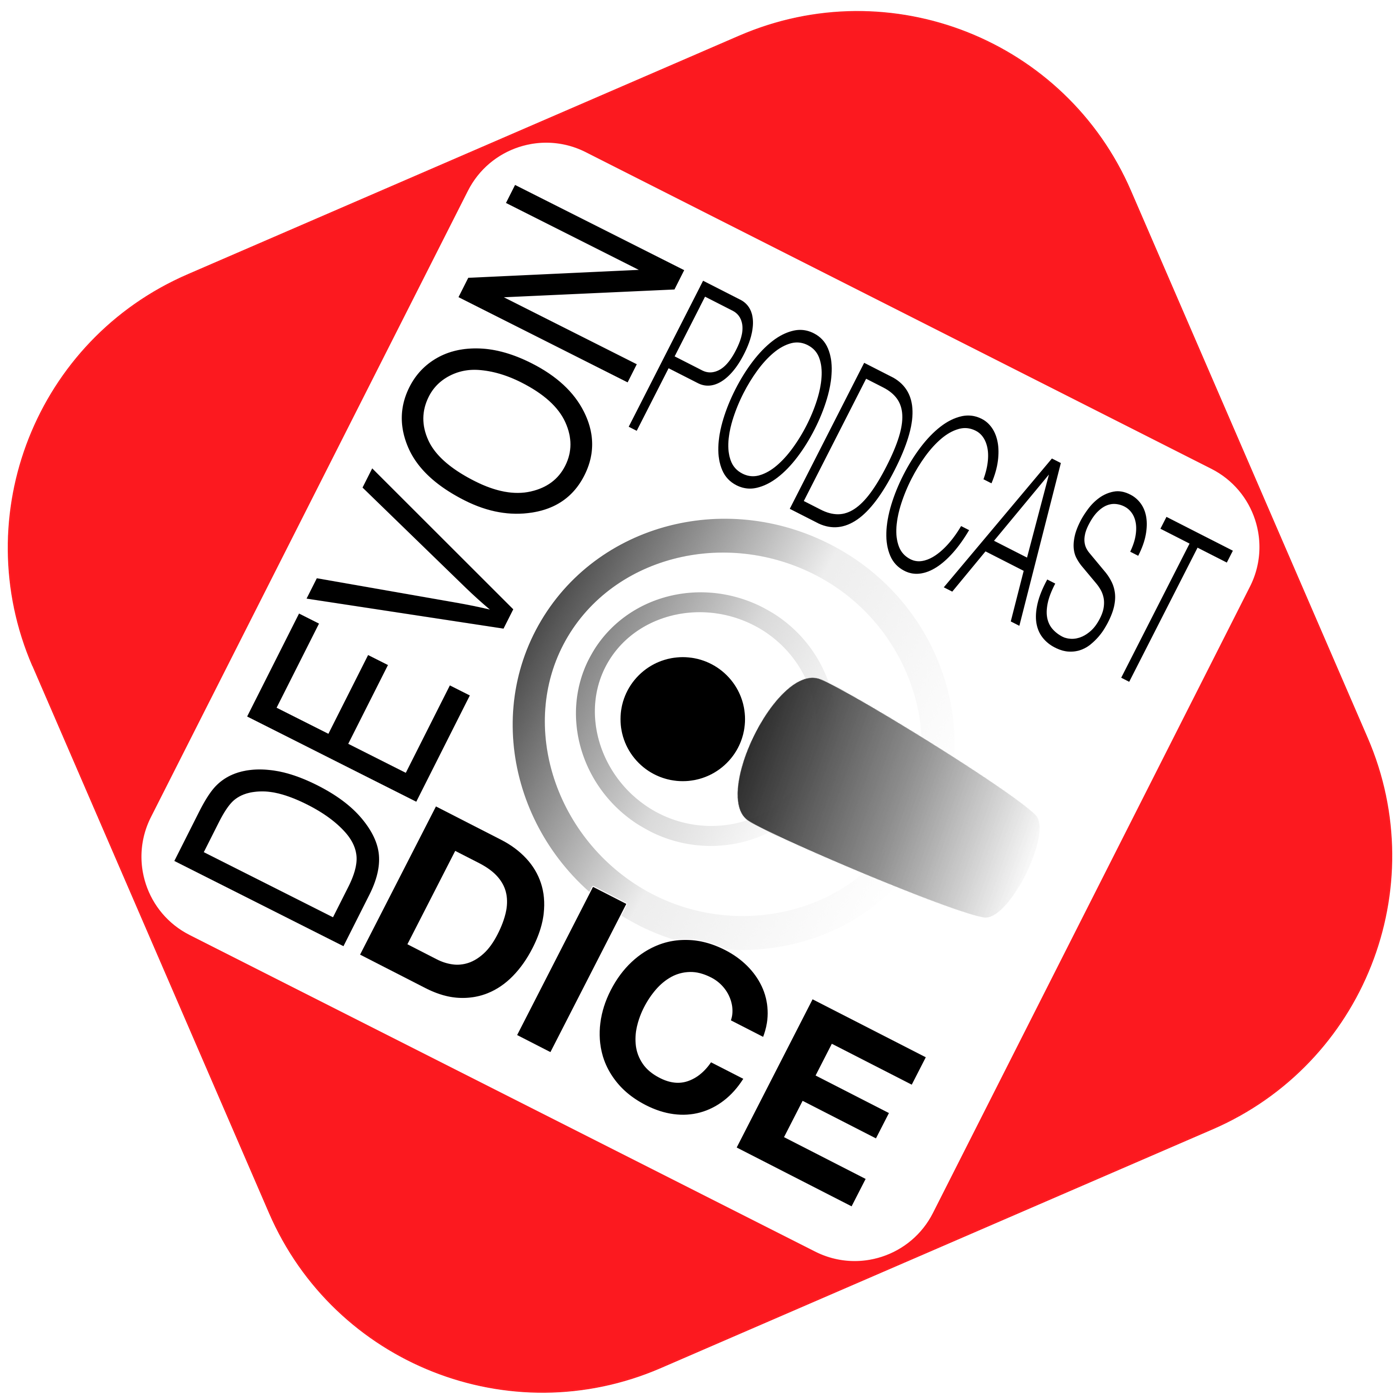 5. Devon Dice Podcast chat show